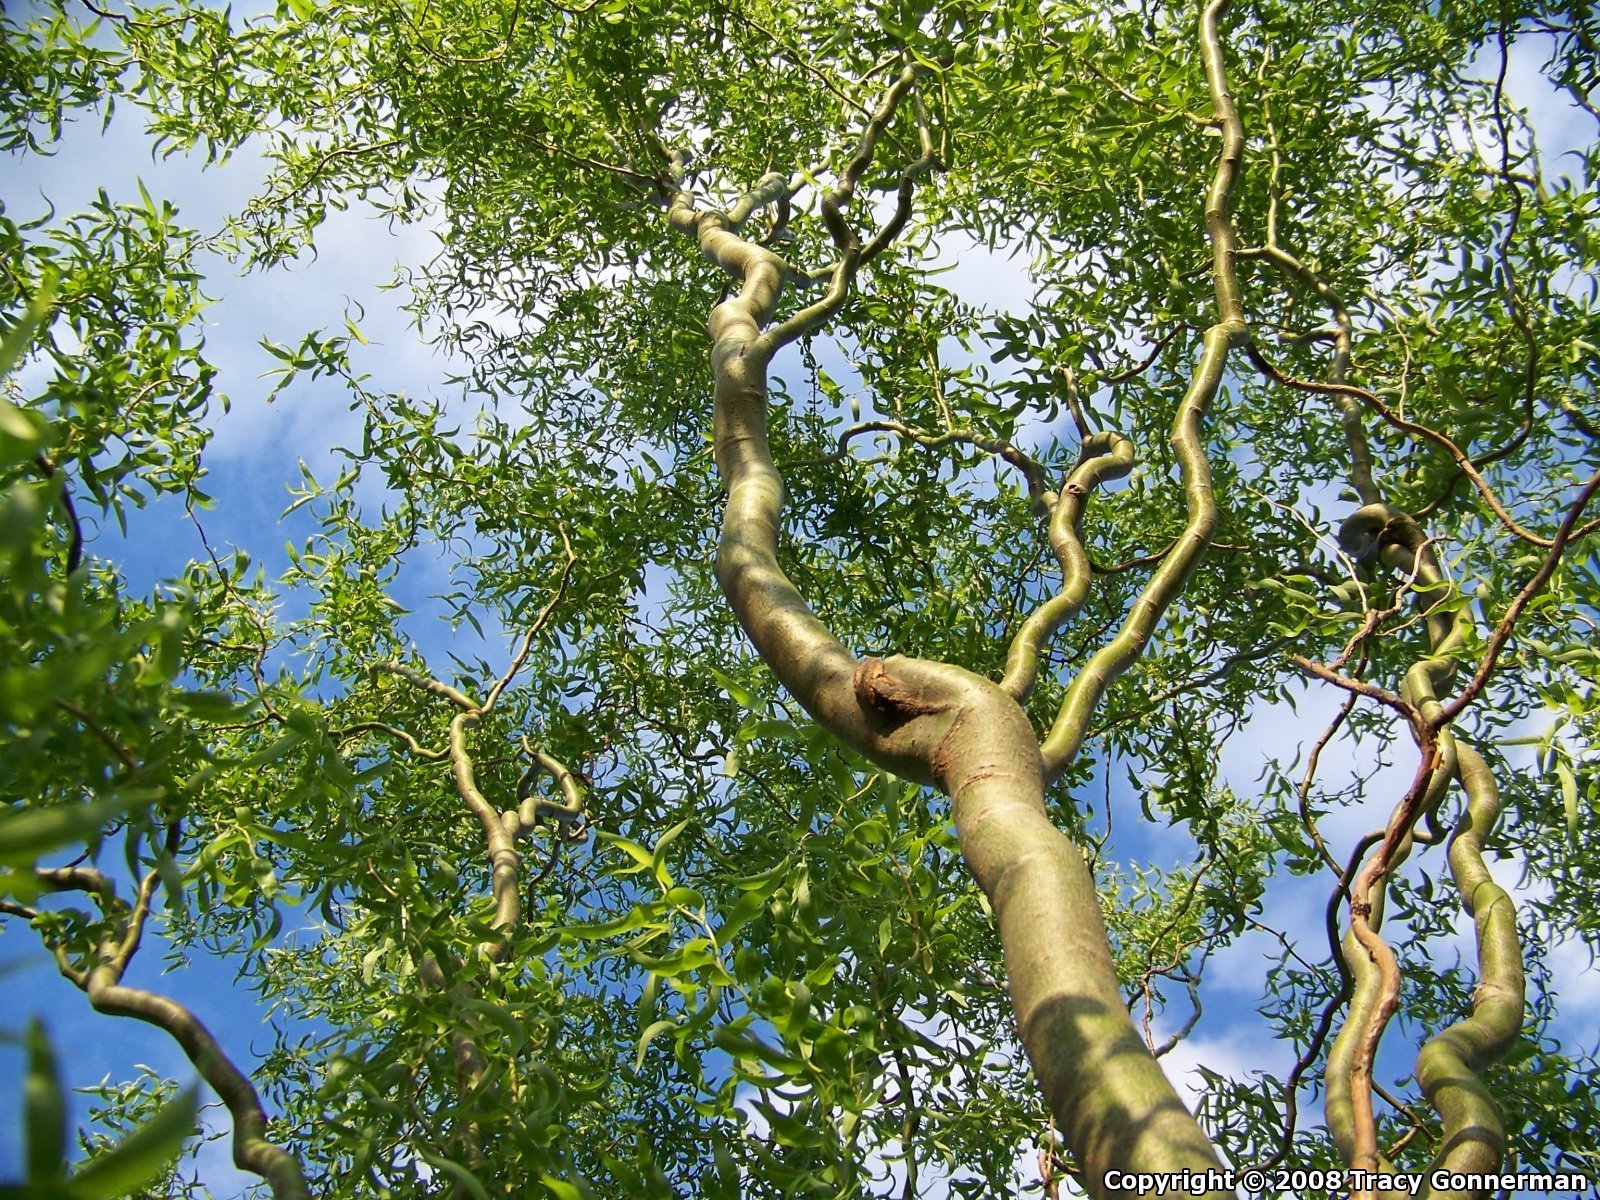 Corkscrew Weeping Willow Tree